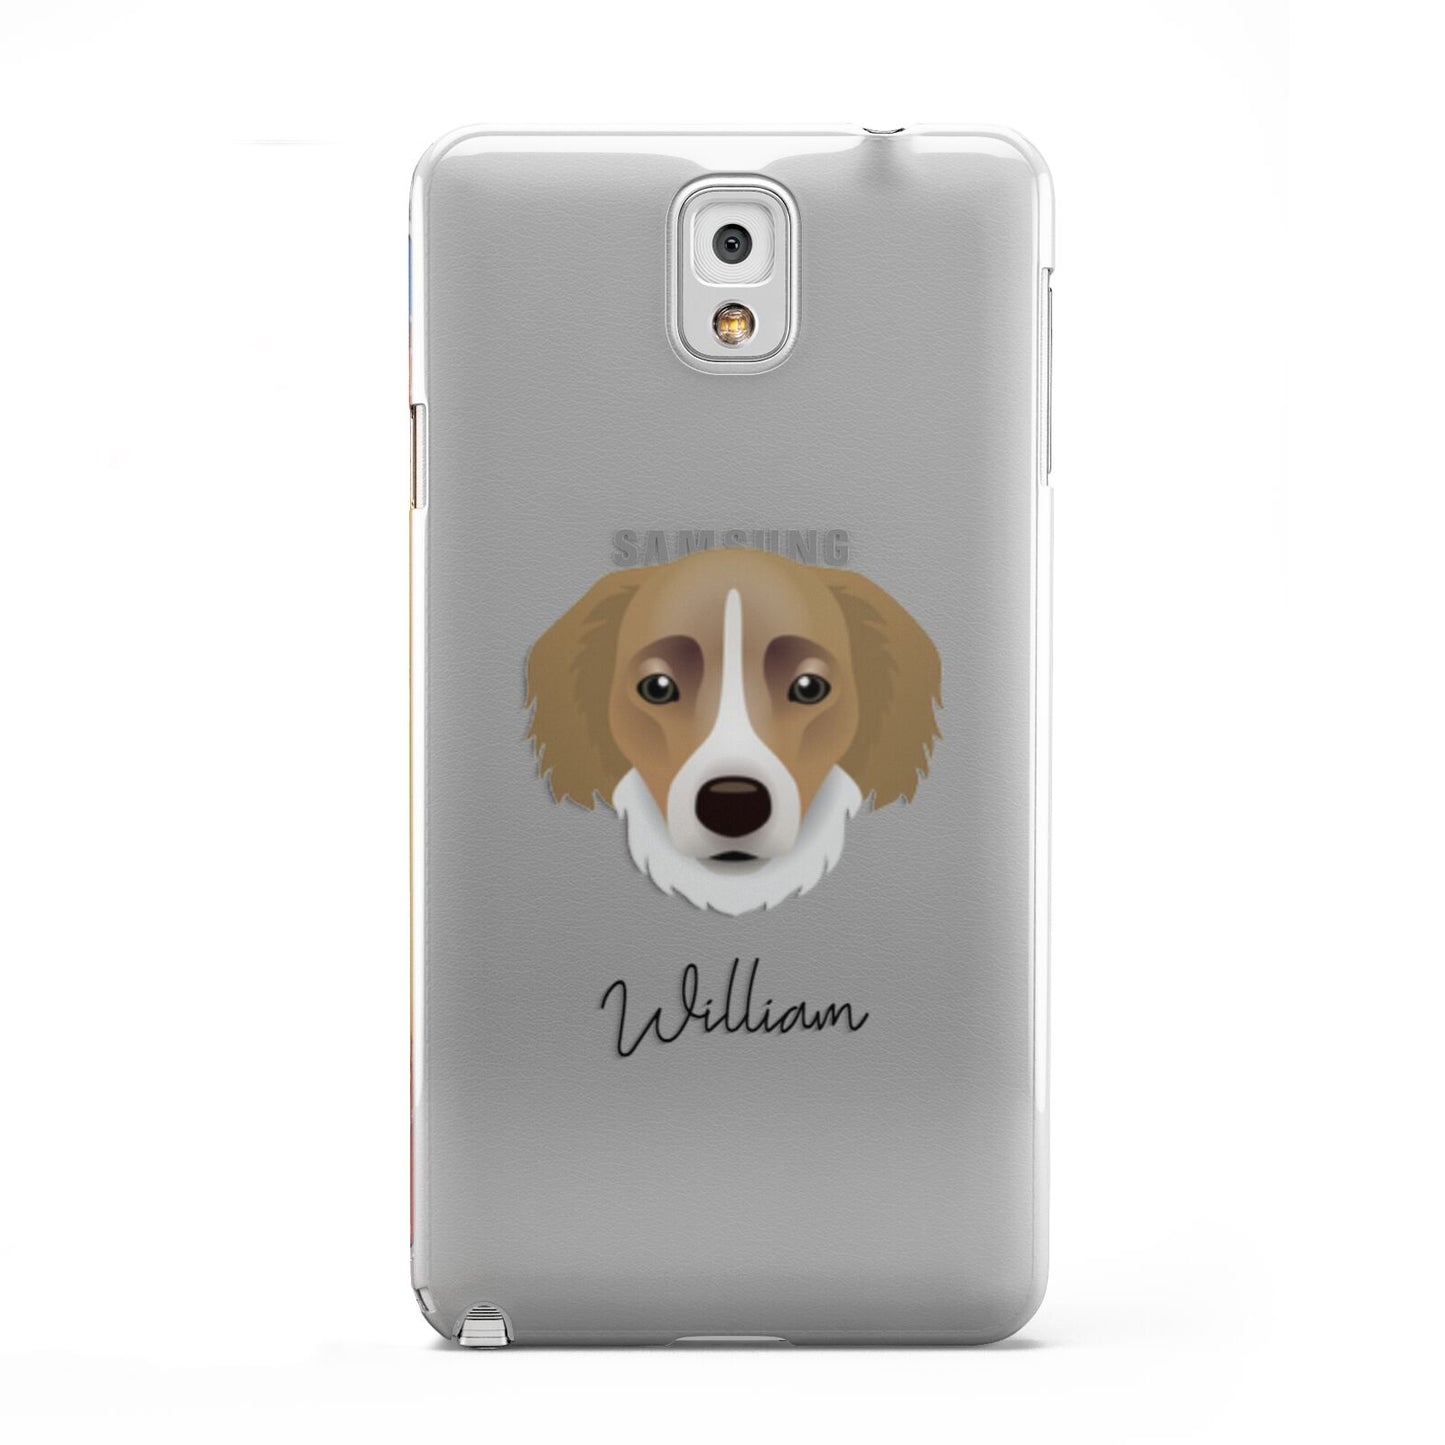 Siberian Cocker Personalised Samsung Galaxy Note 3 Case